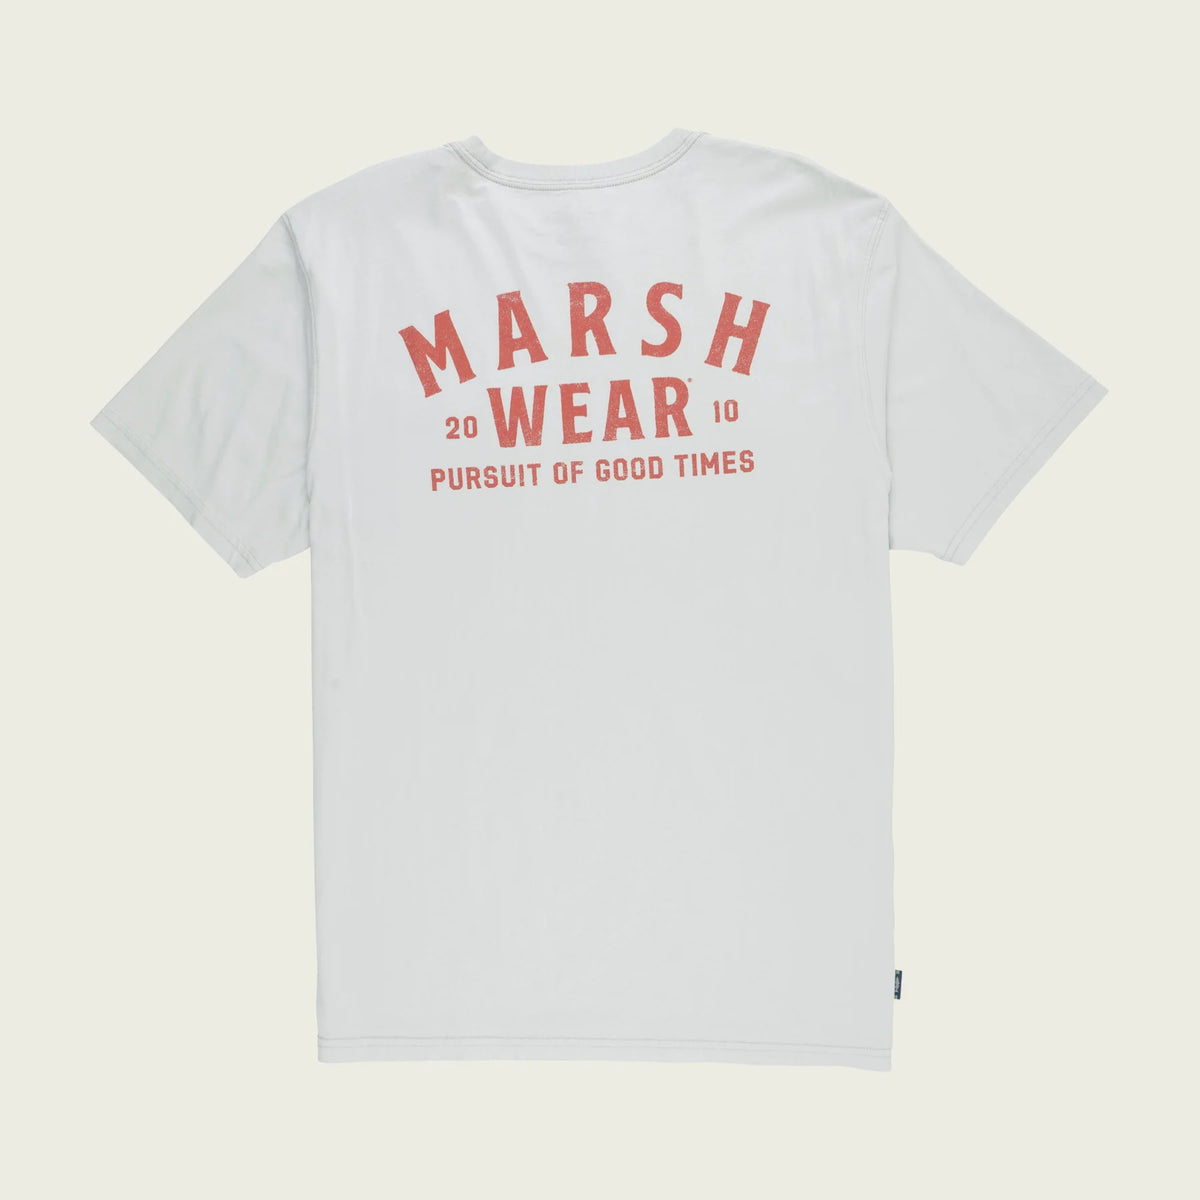 Marshwear - Alton, silver